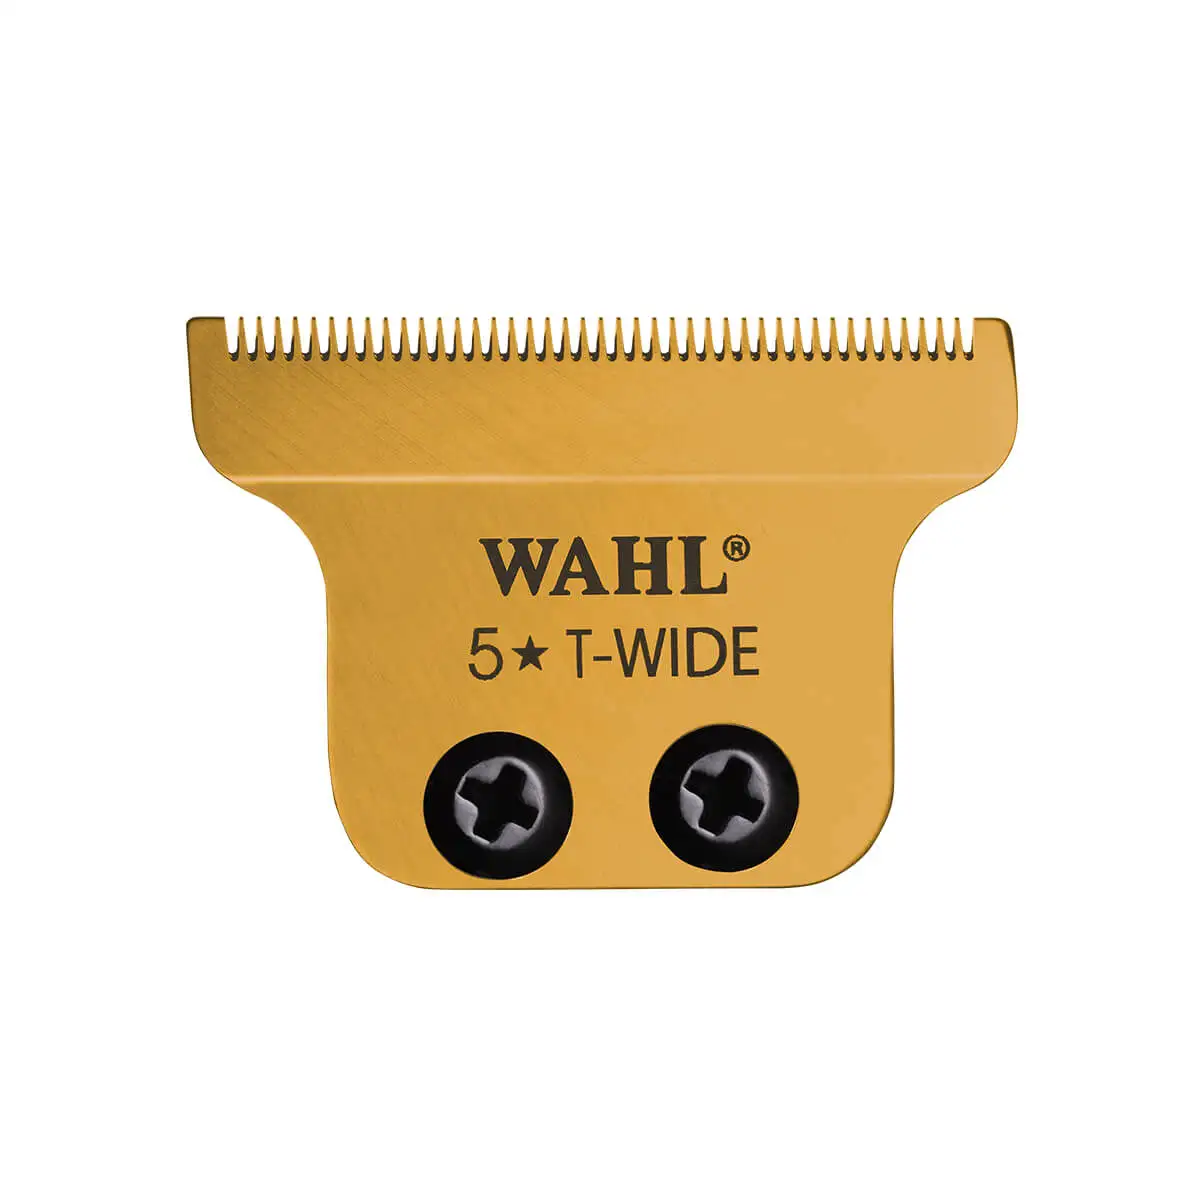 Wahl Detailer GOLD Cordless Limited Edition - Cortex Ltd